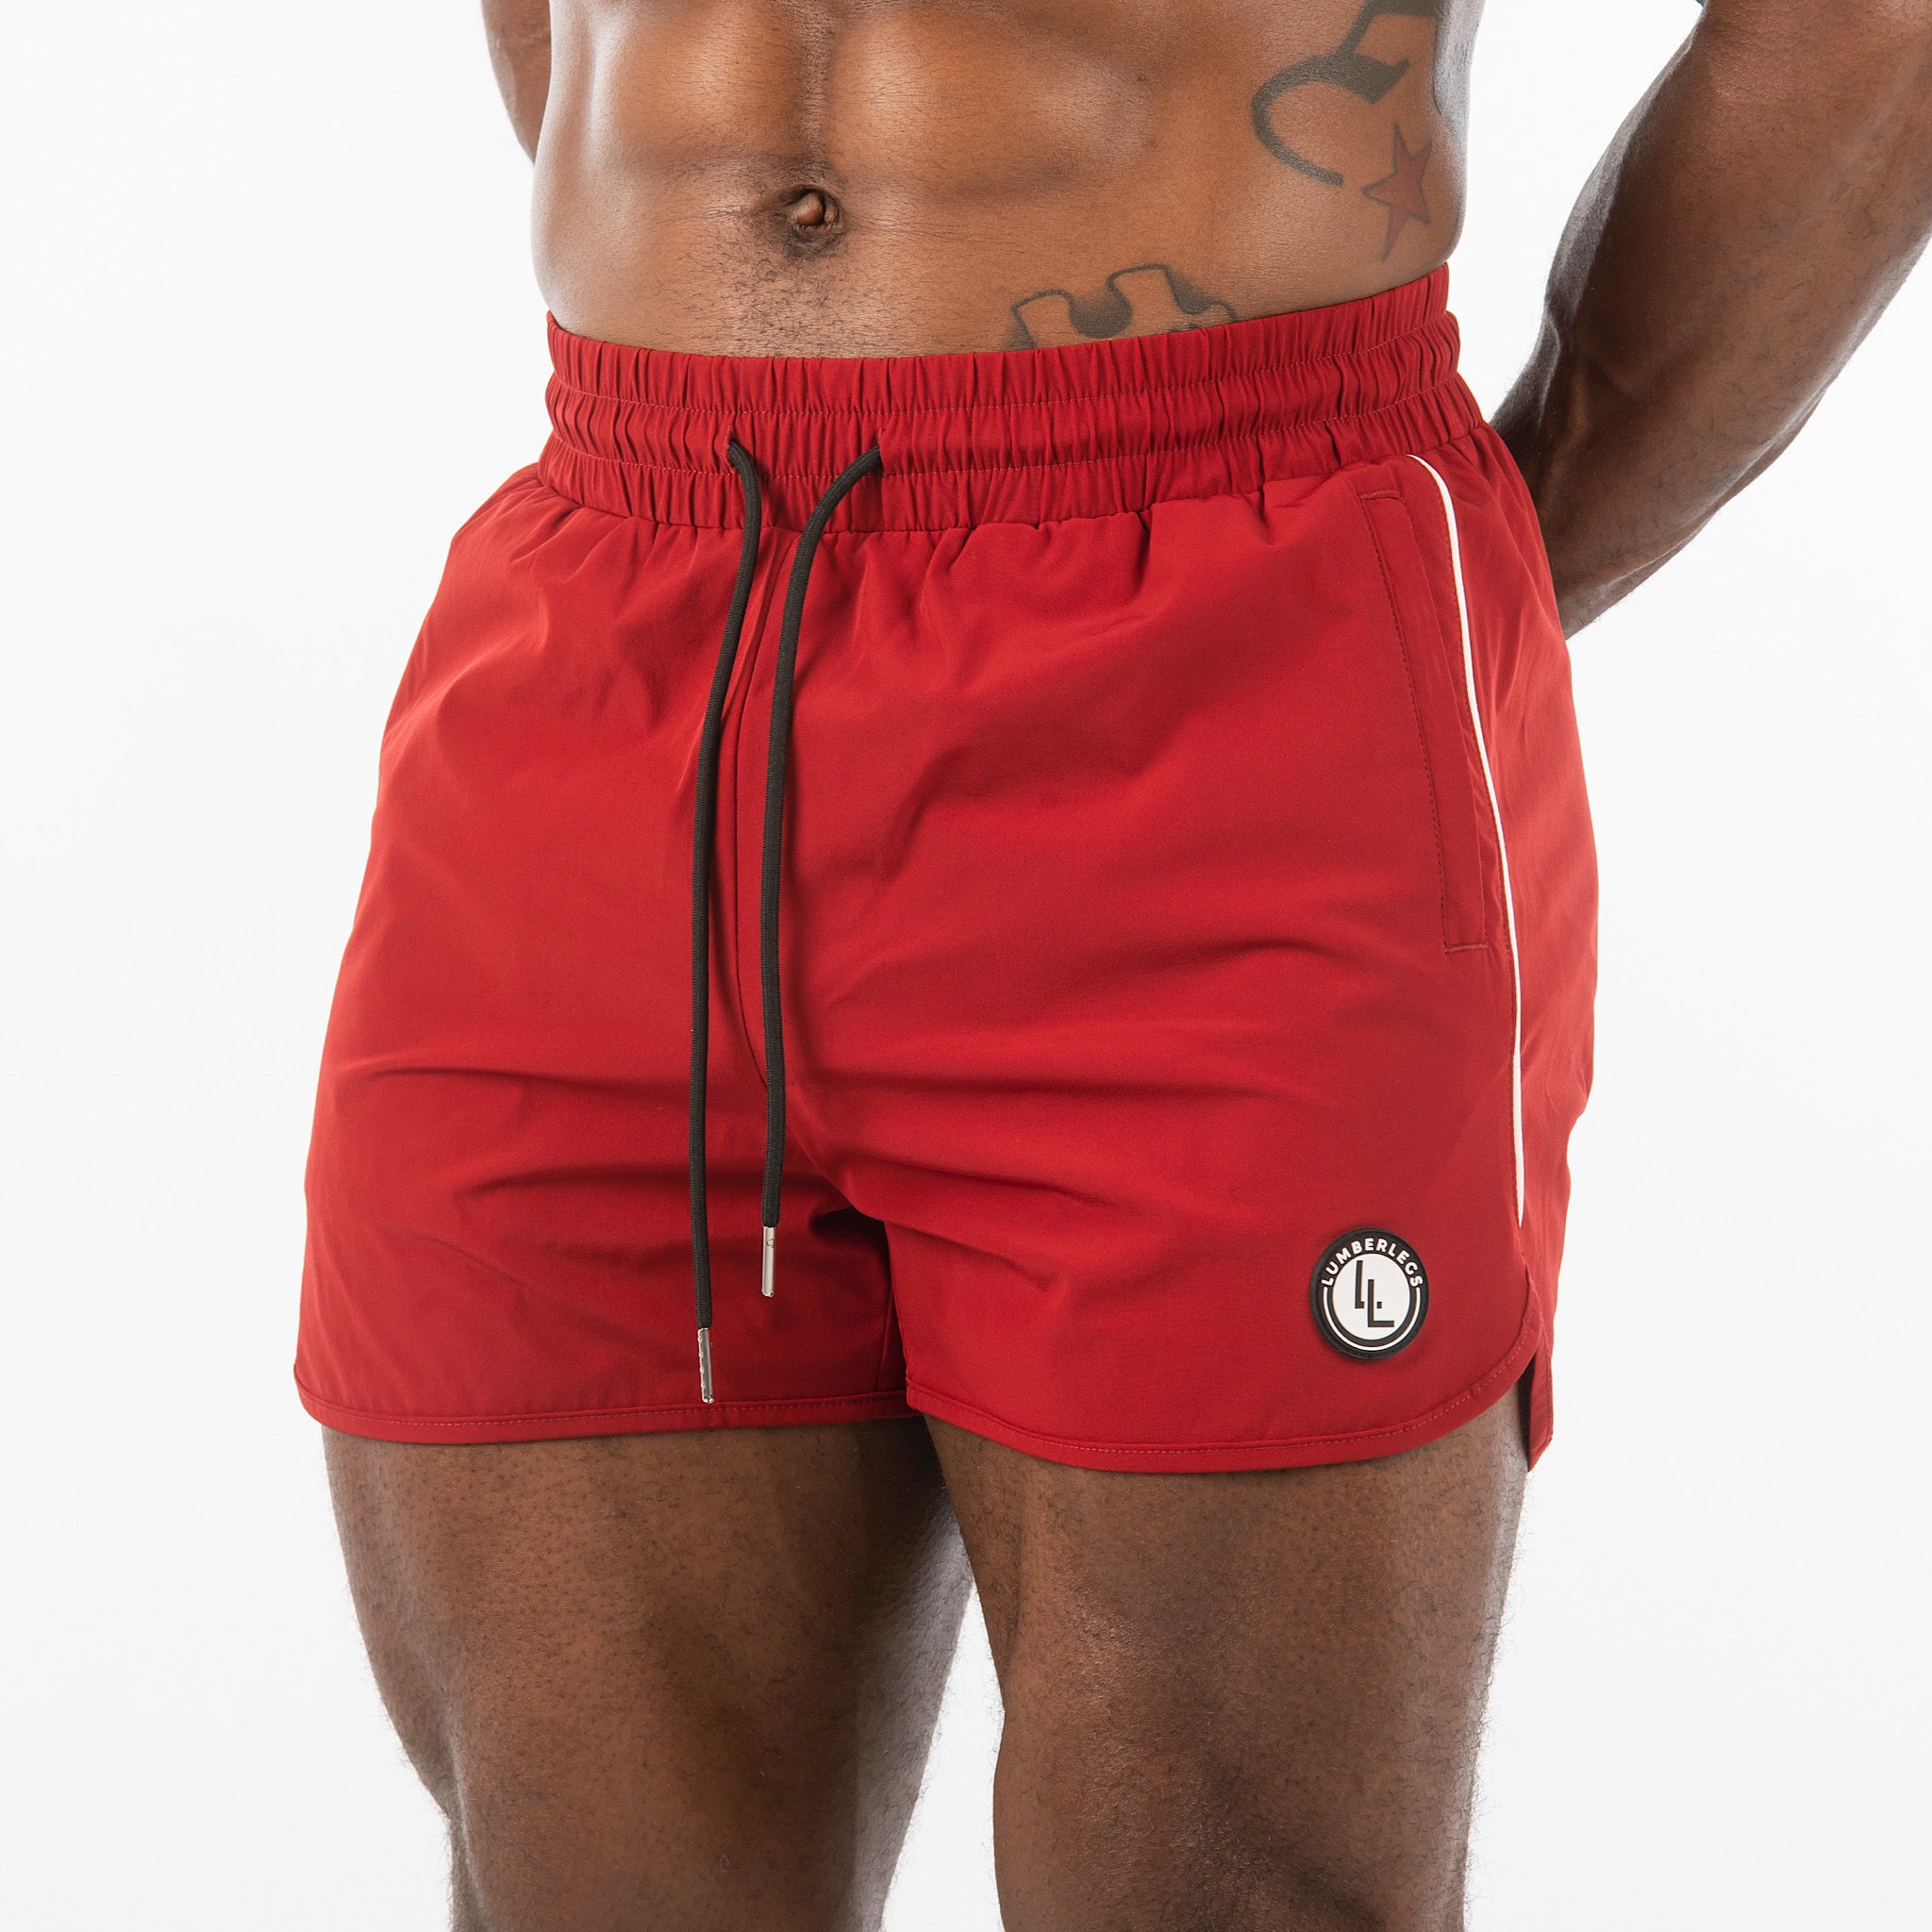 Stylish Men Workout Shorts